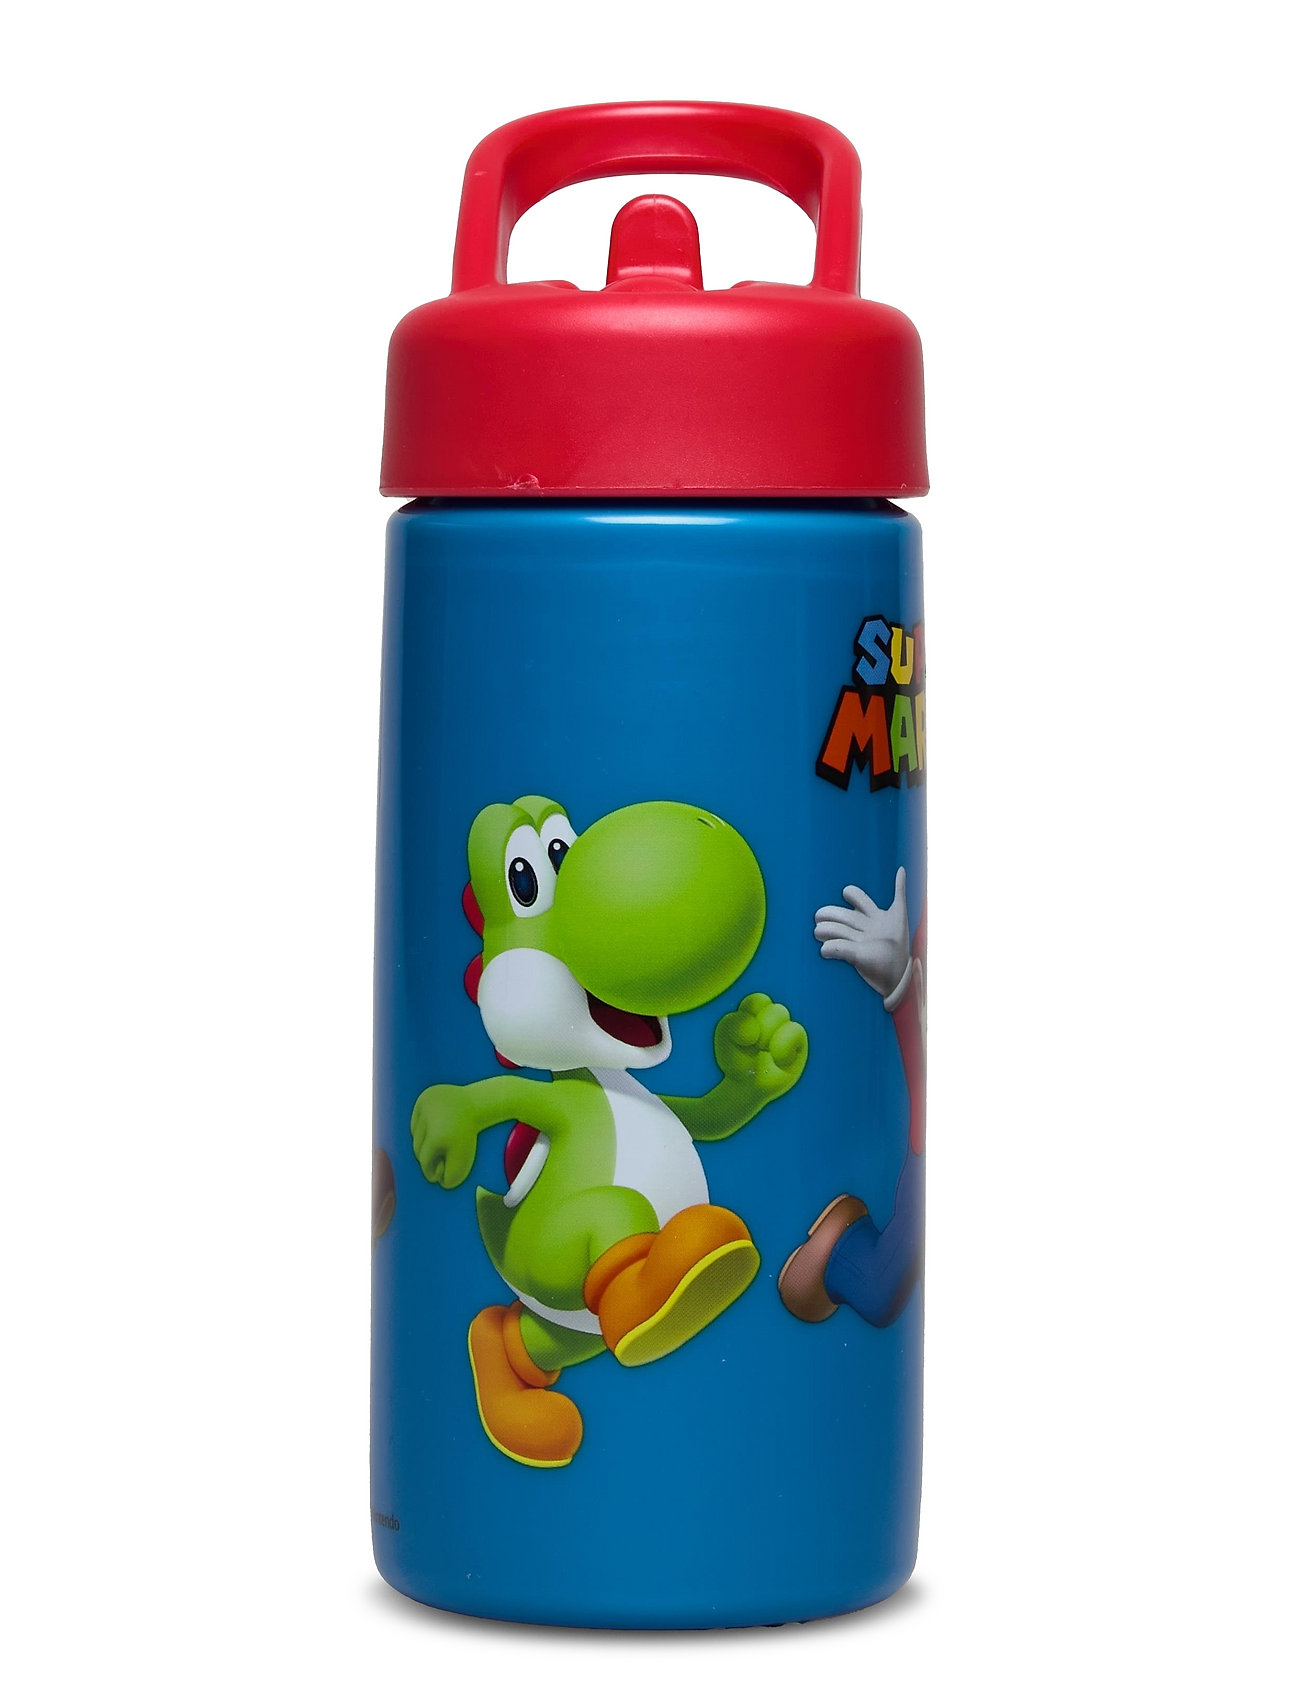 Super Mario Sipper Water Bottle Home Meal Time Water Bottles Sininen Euromic